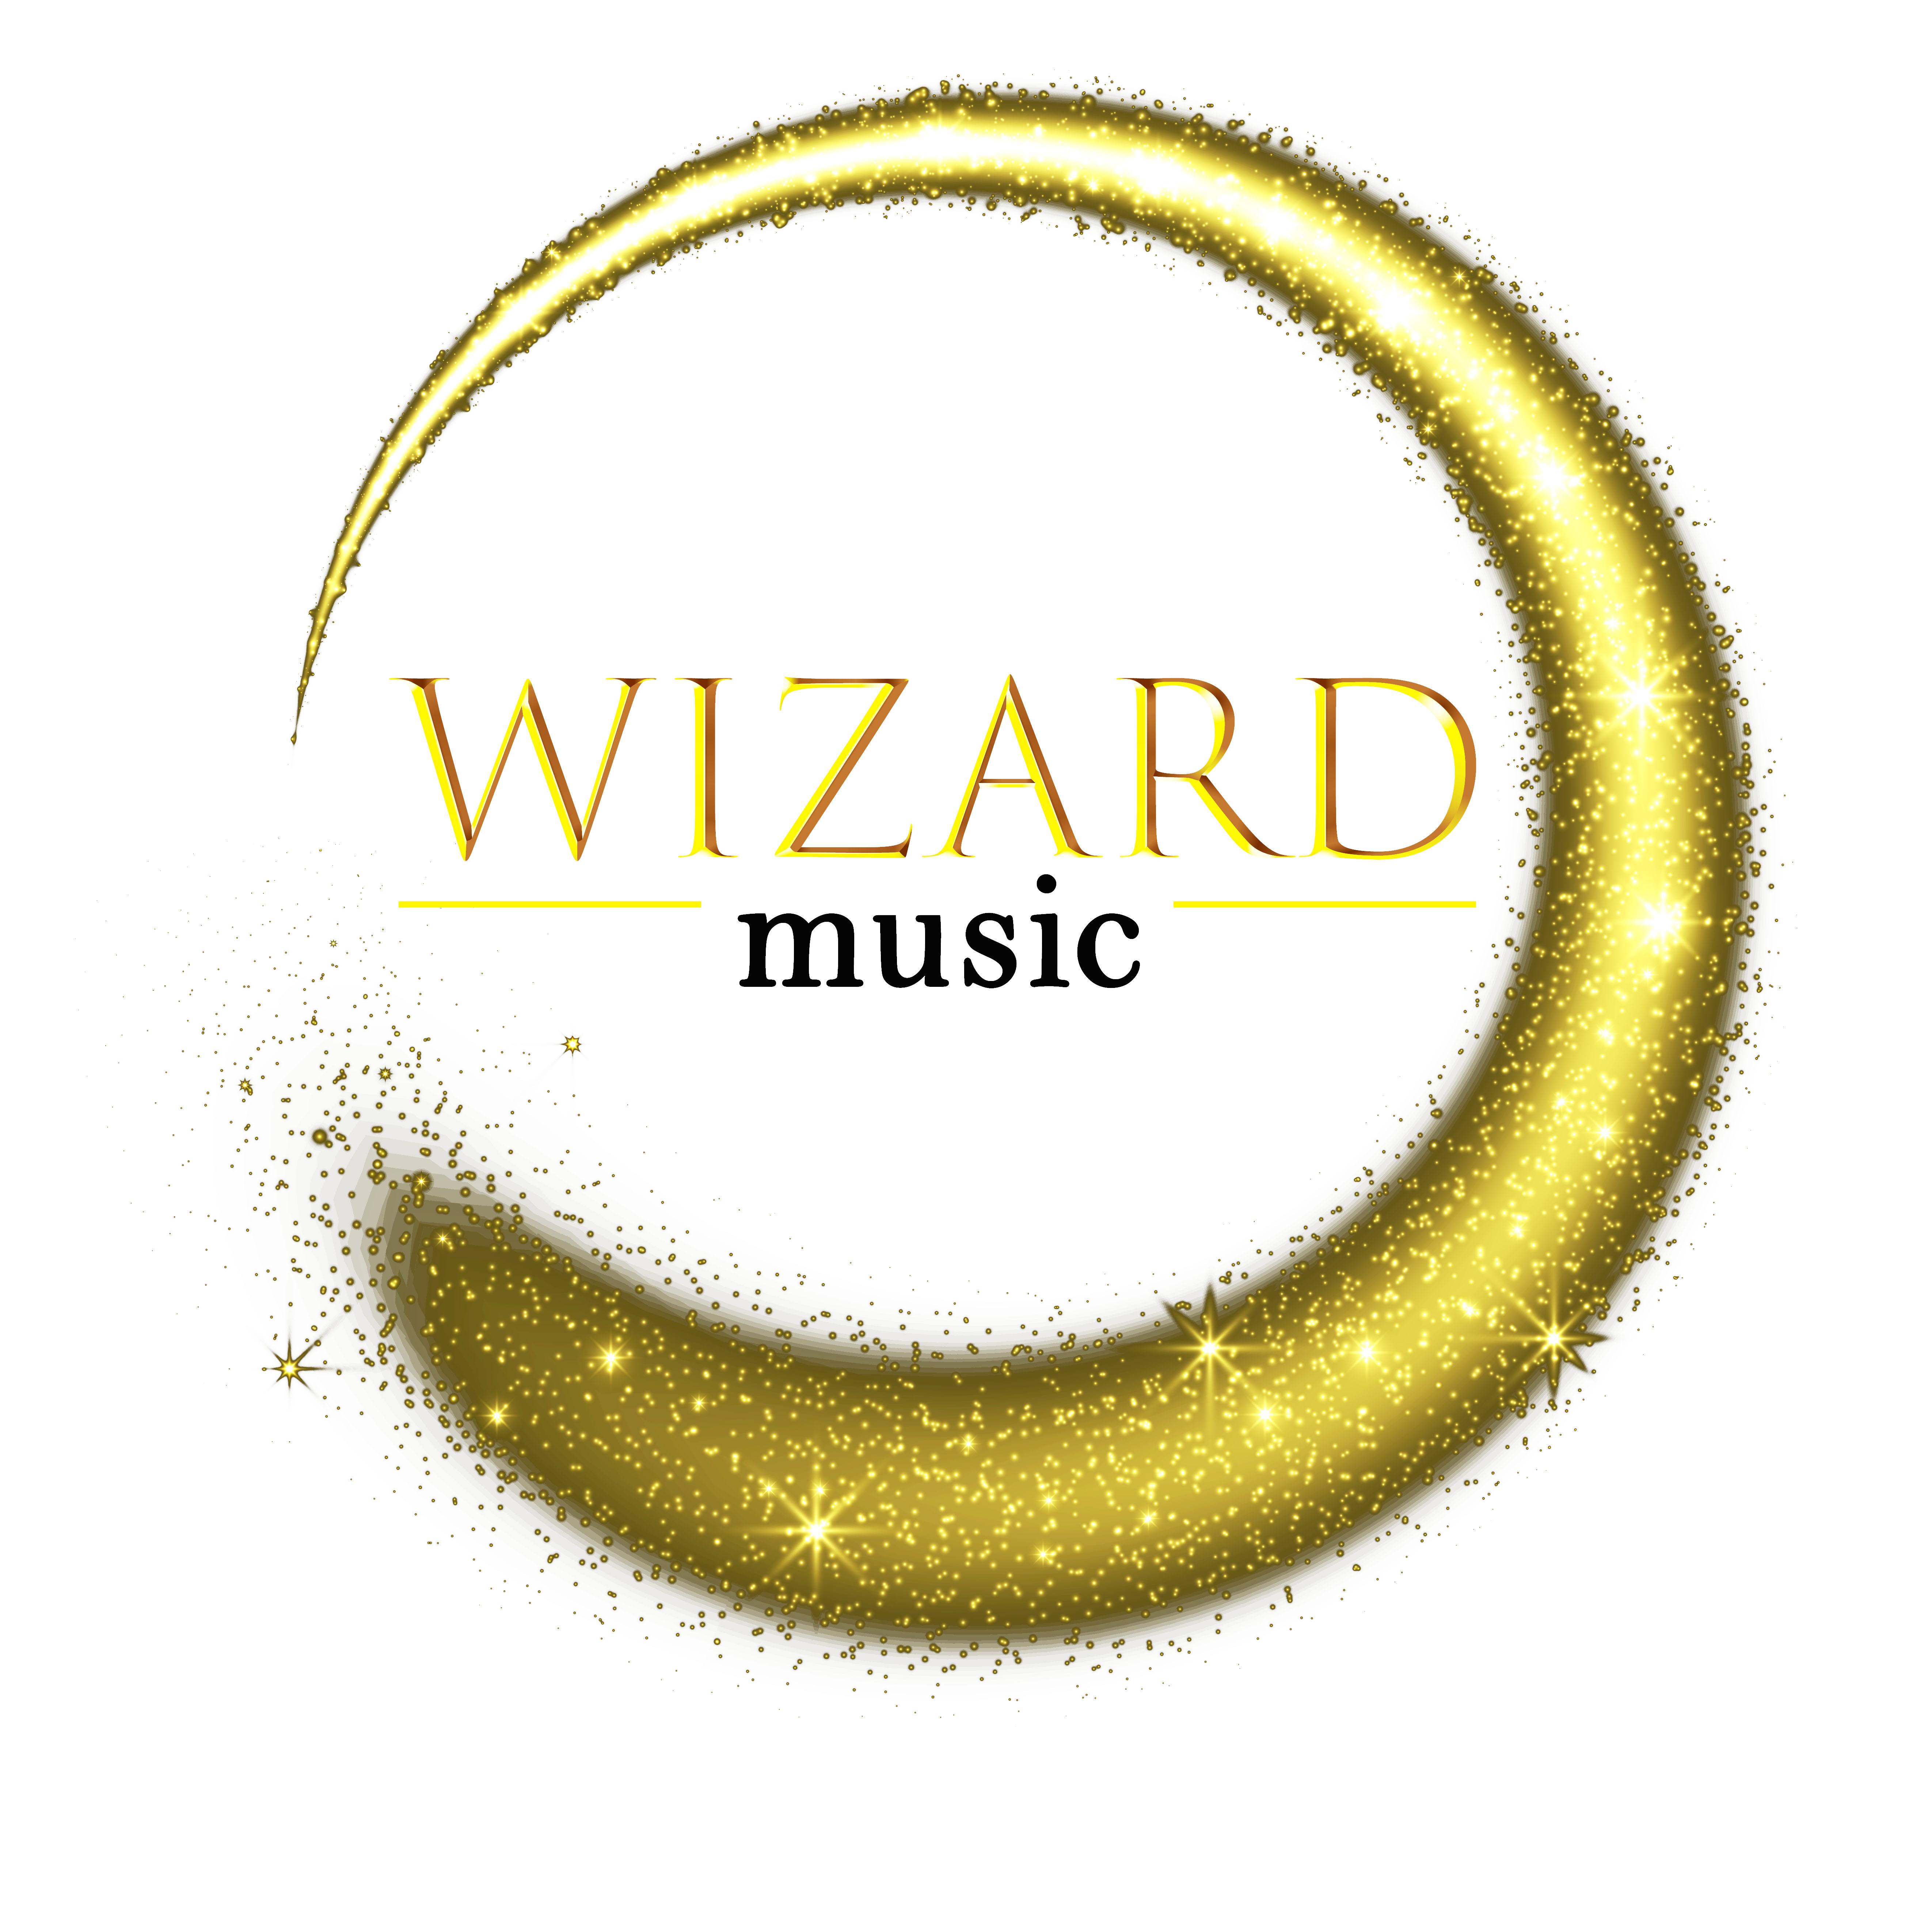 Wizard music